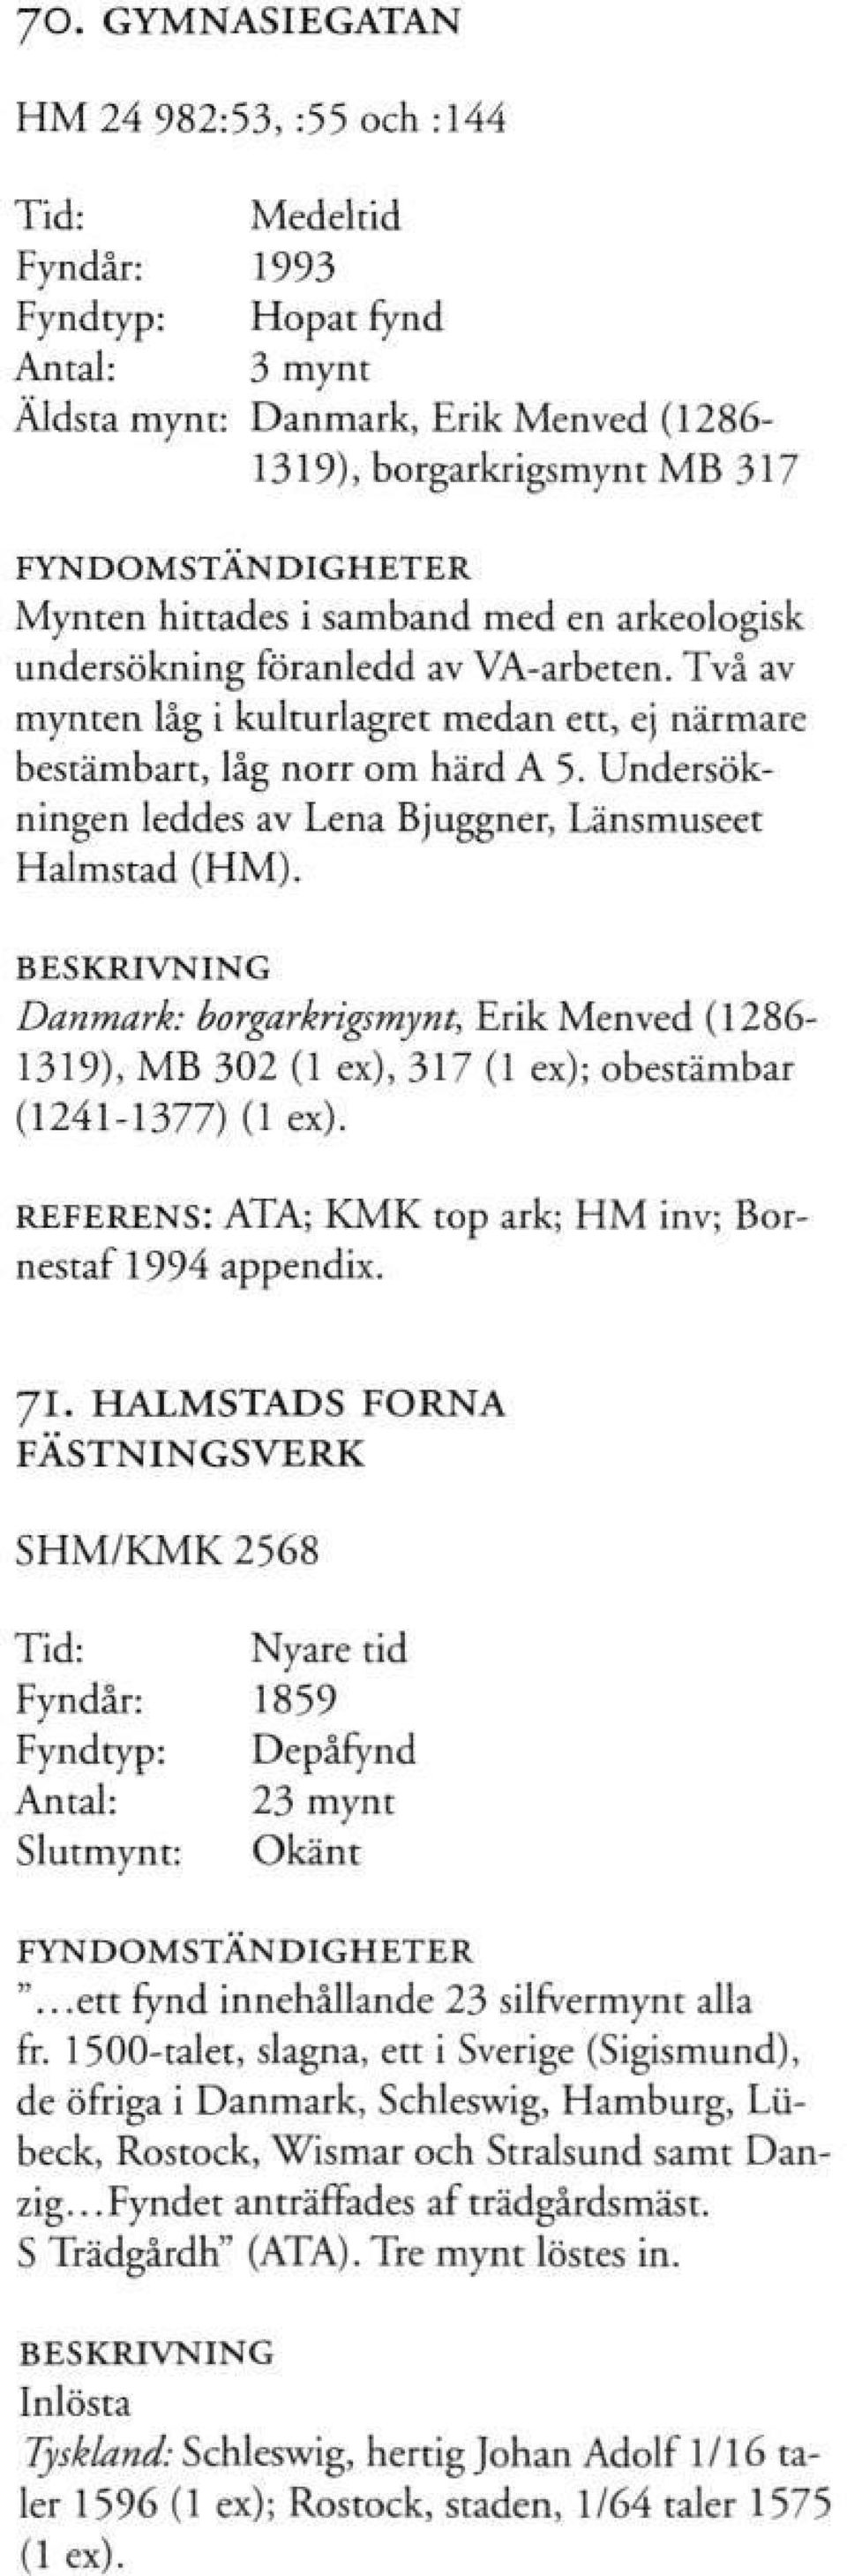 Danmark: borgarkrigsmynt, Erik Menved (1286-1319), MB 302 (1 ex), 317 (1 ex); obestämbar (1241-1377) (1 ex). REFERENS: ATA; KMK top ark; HM inv; Bornestaf 1994 appendix. Jl.